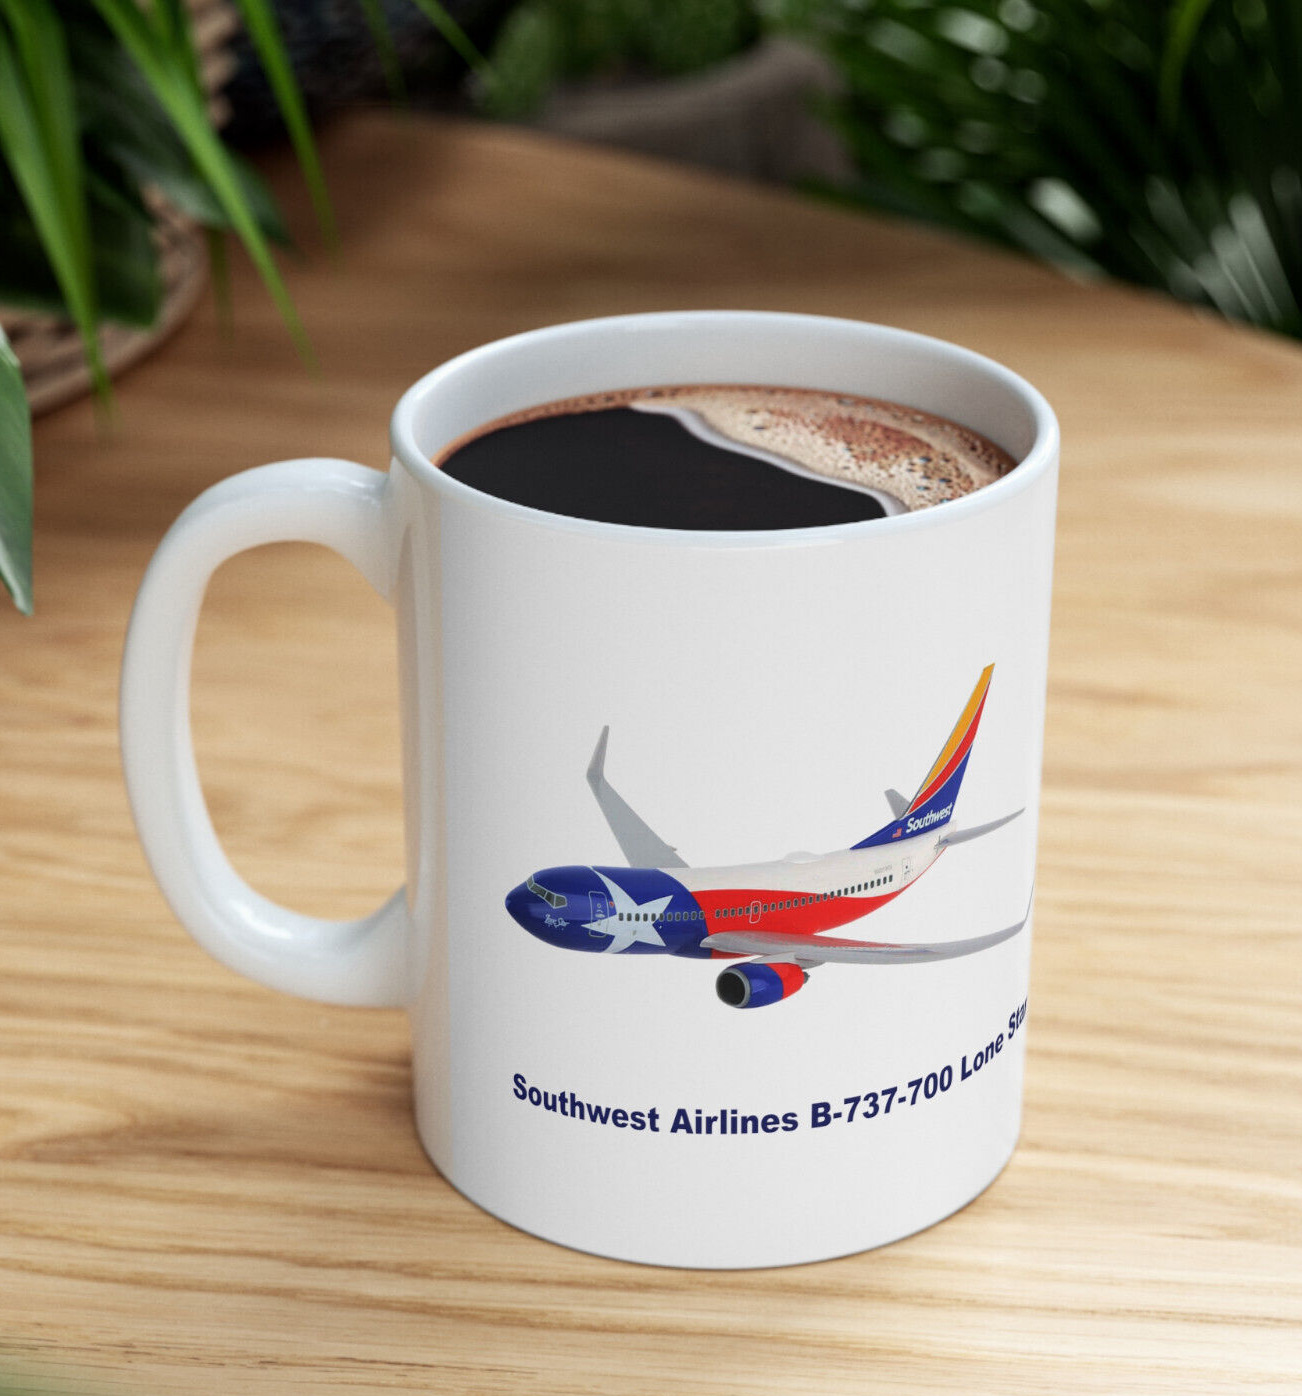 Southwest Airlines B-737-700 Lone Star Coffee Mug